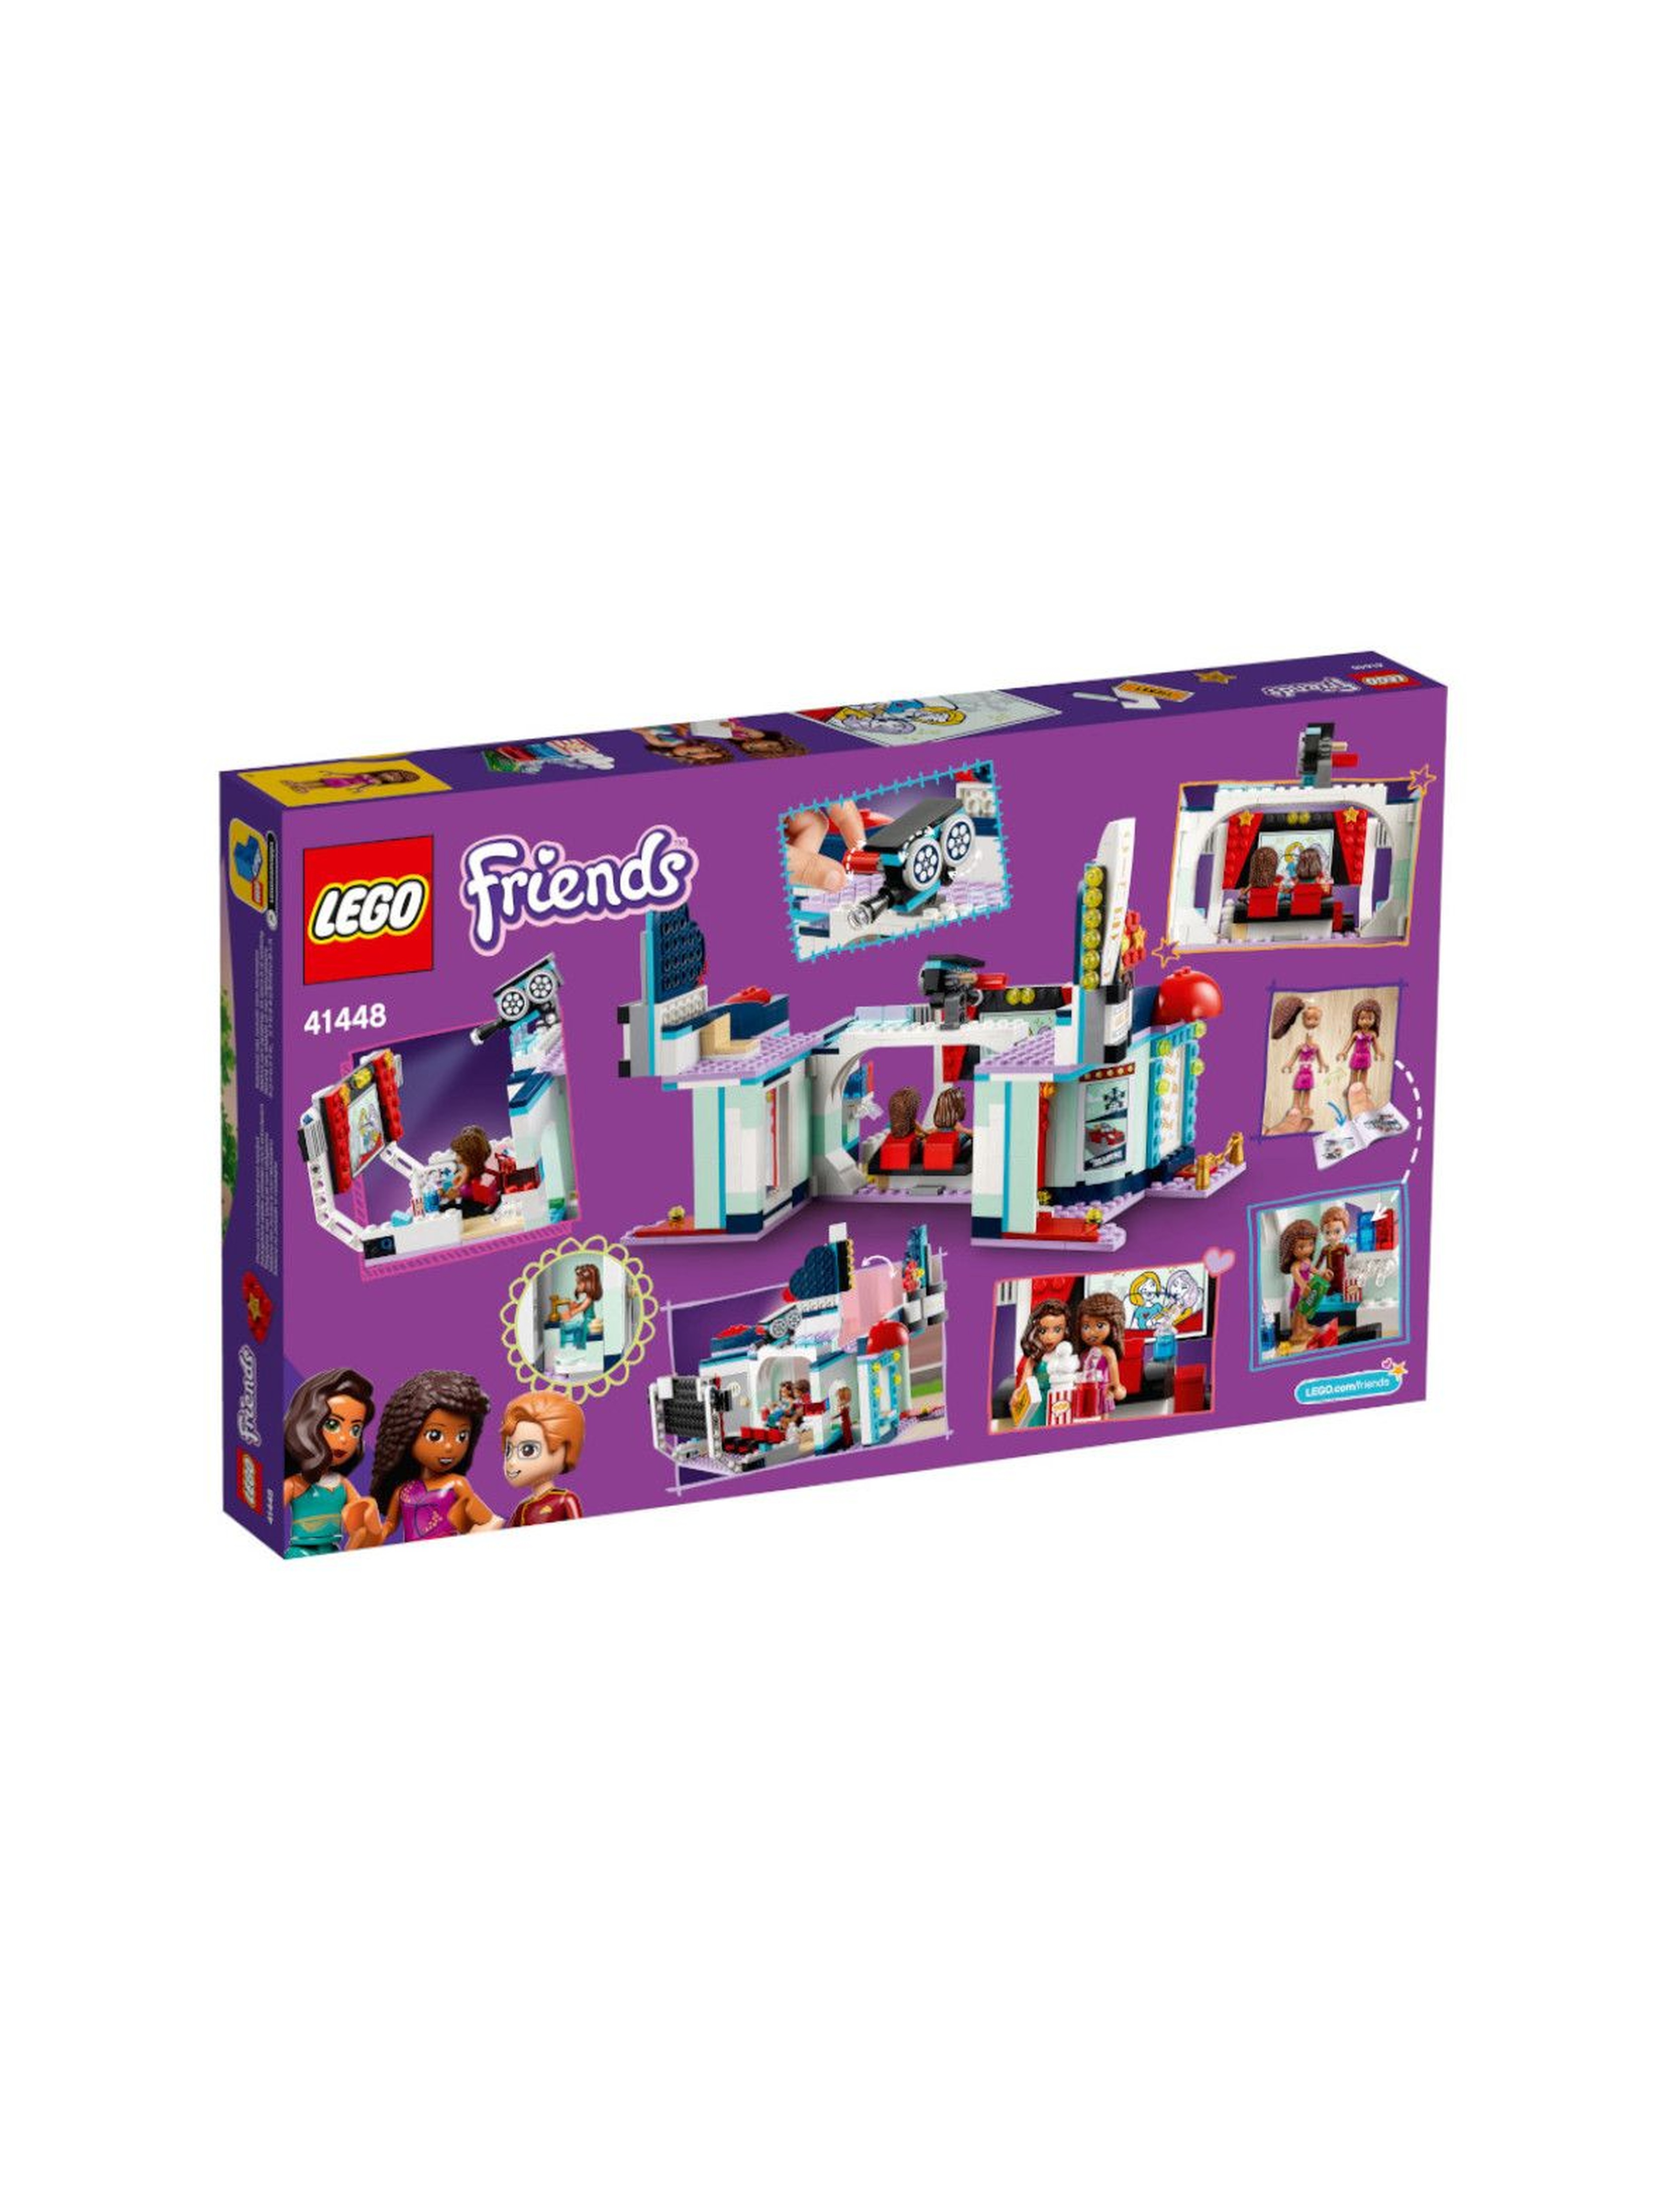 LEGO Friends -  Kino w Heartlake City - 451 el